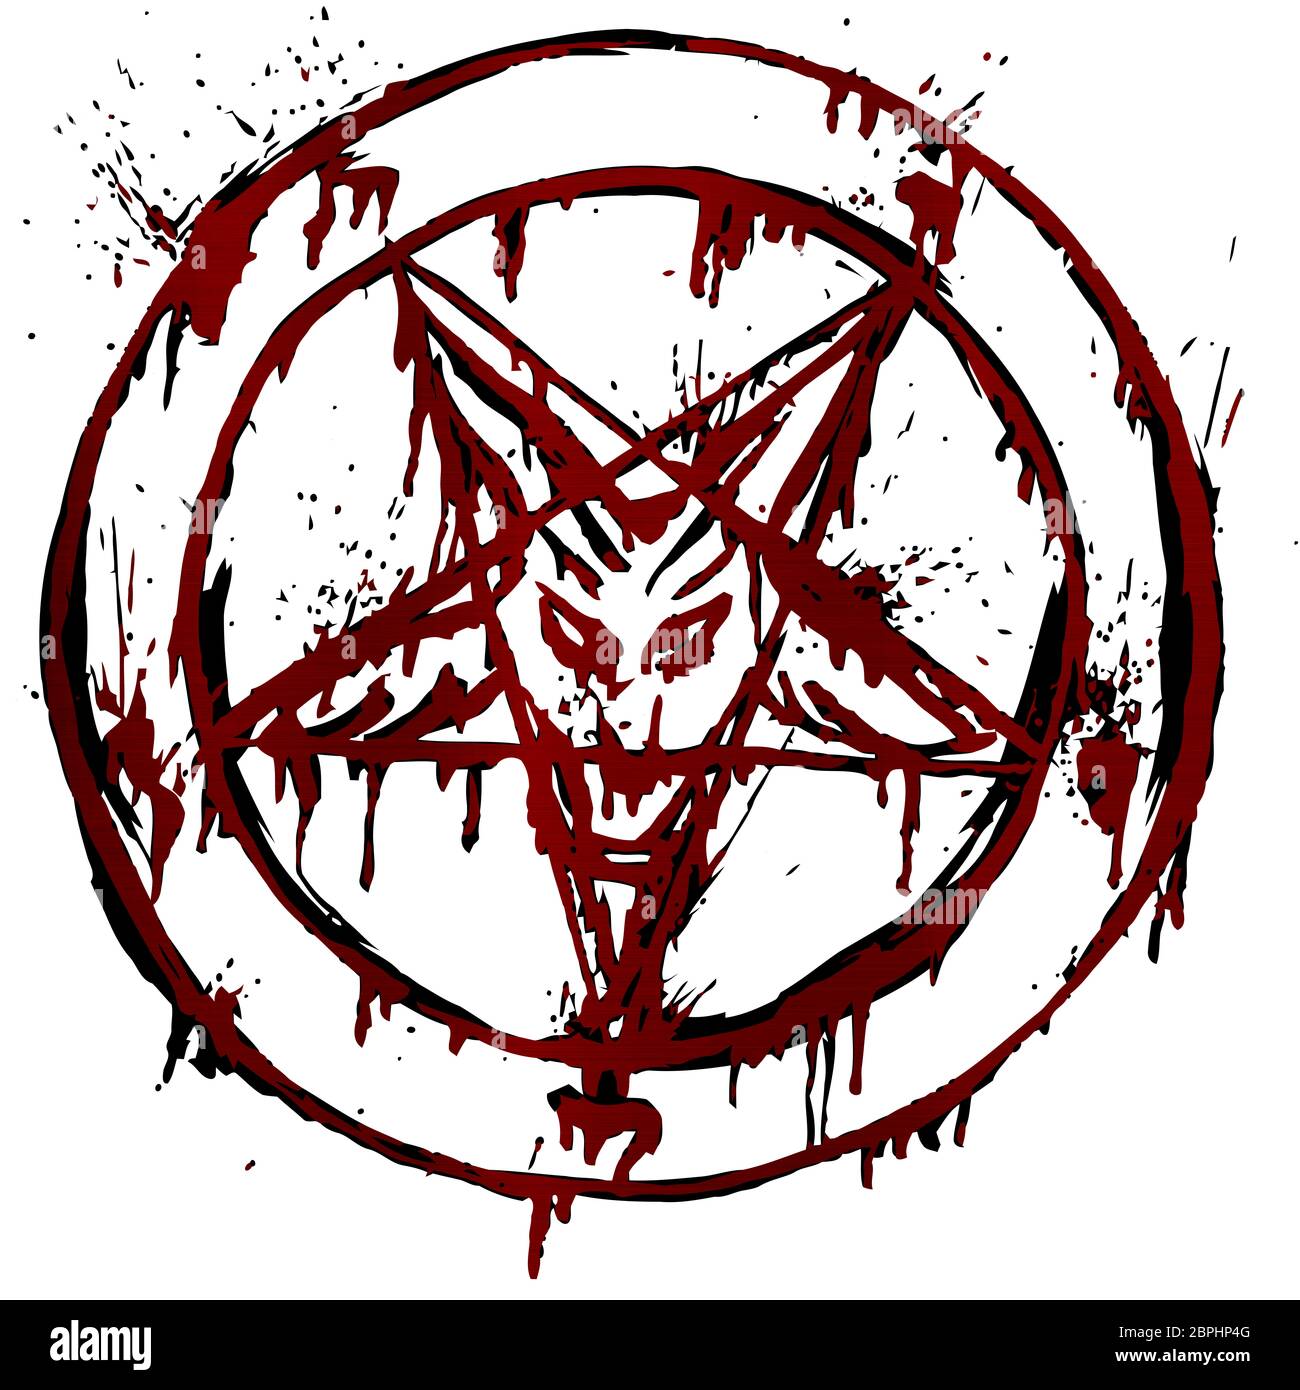 pentagram satan occult devil red blood paganism metallic illustration